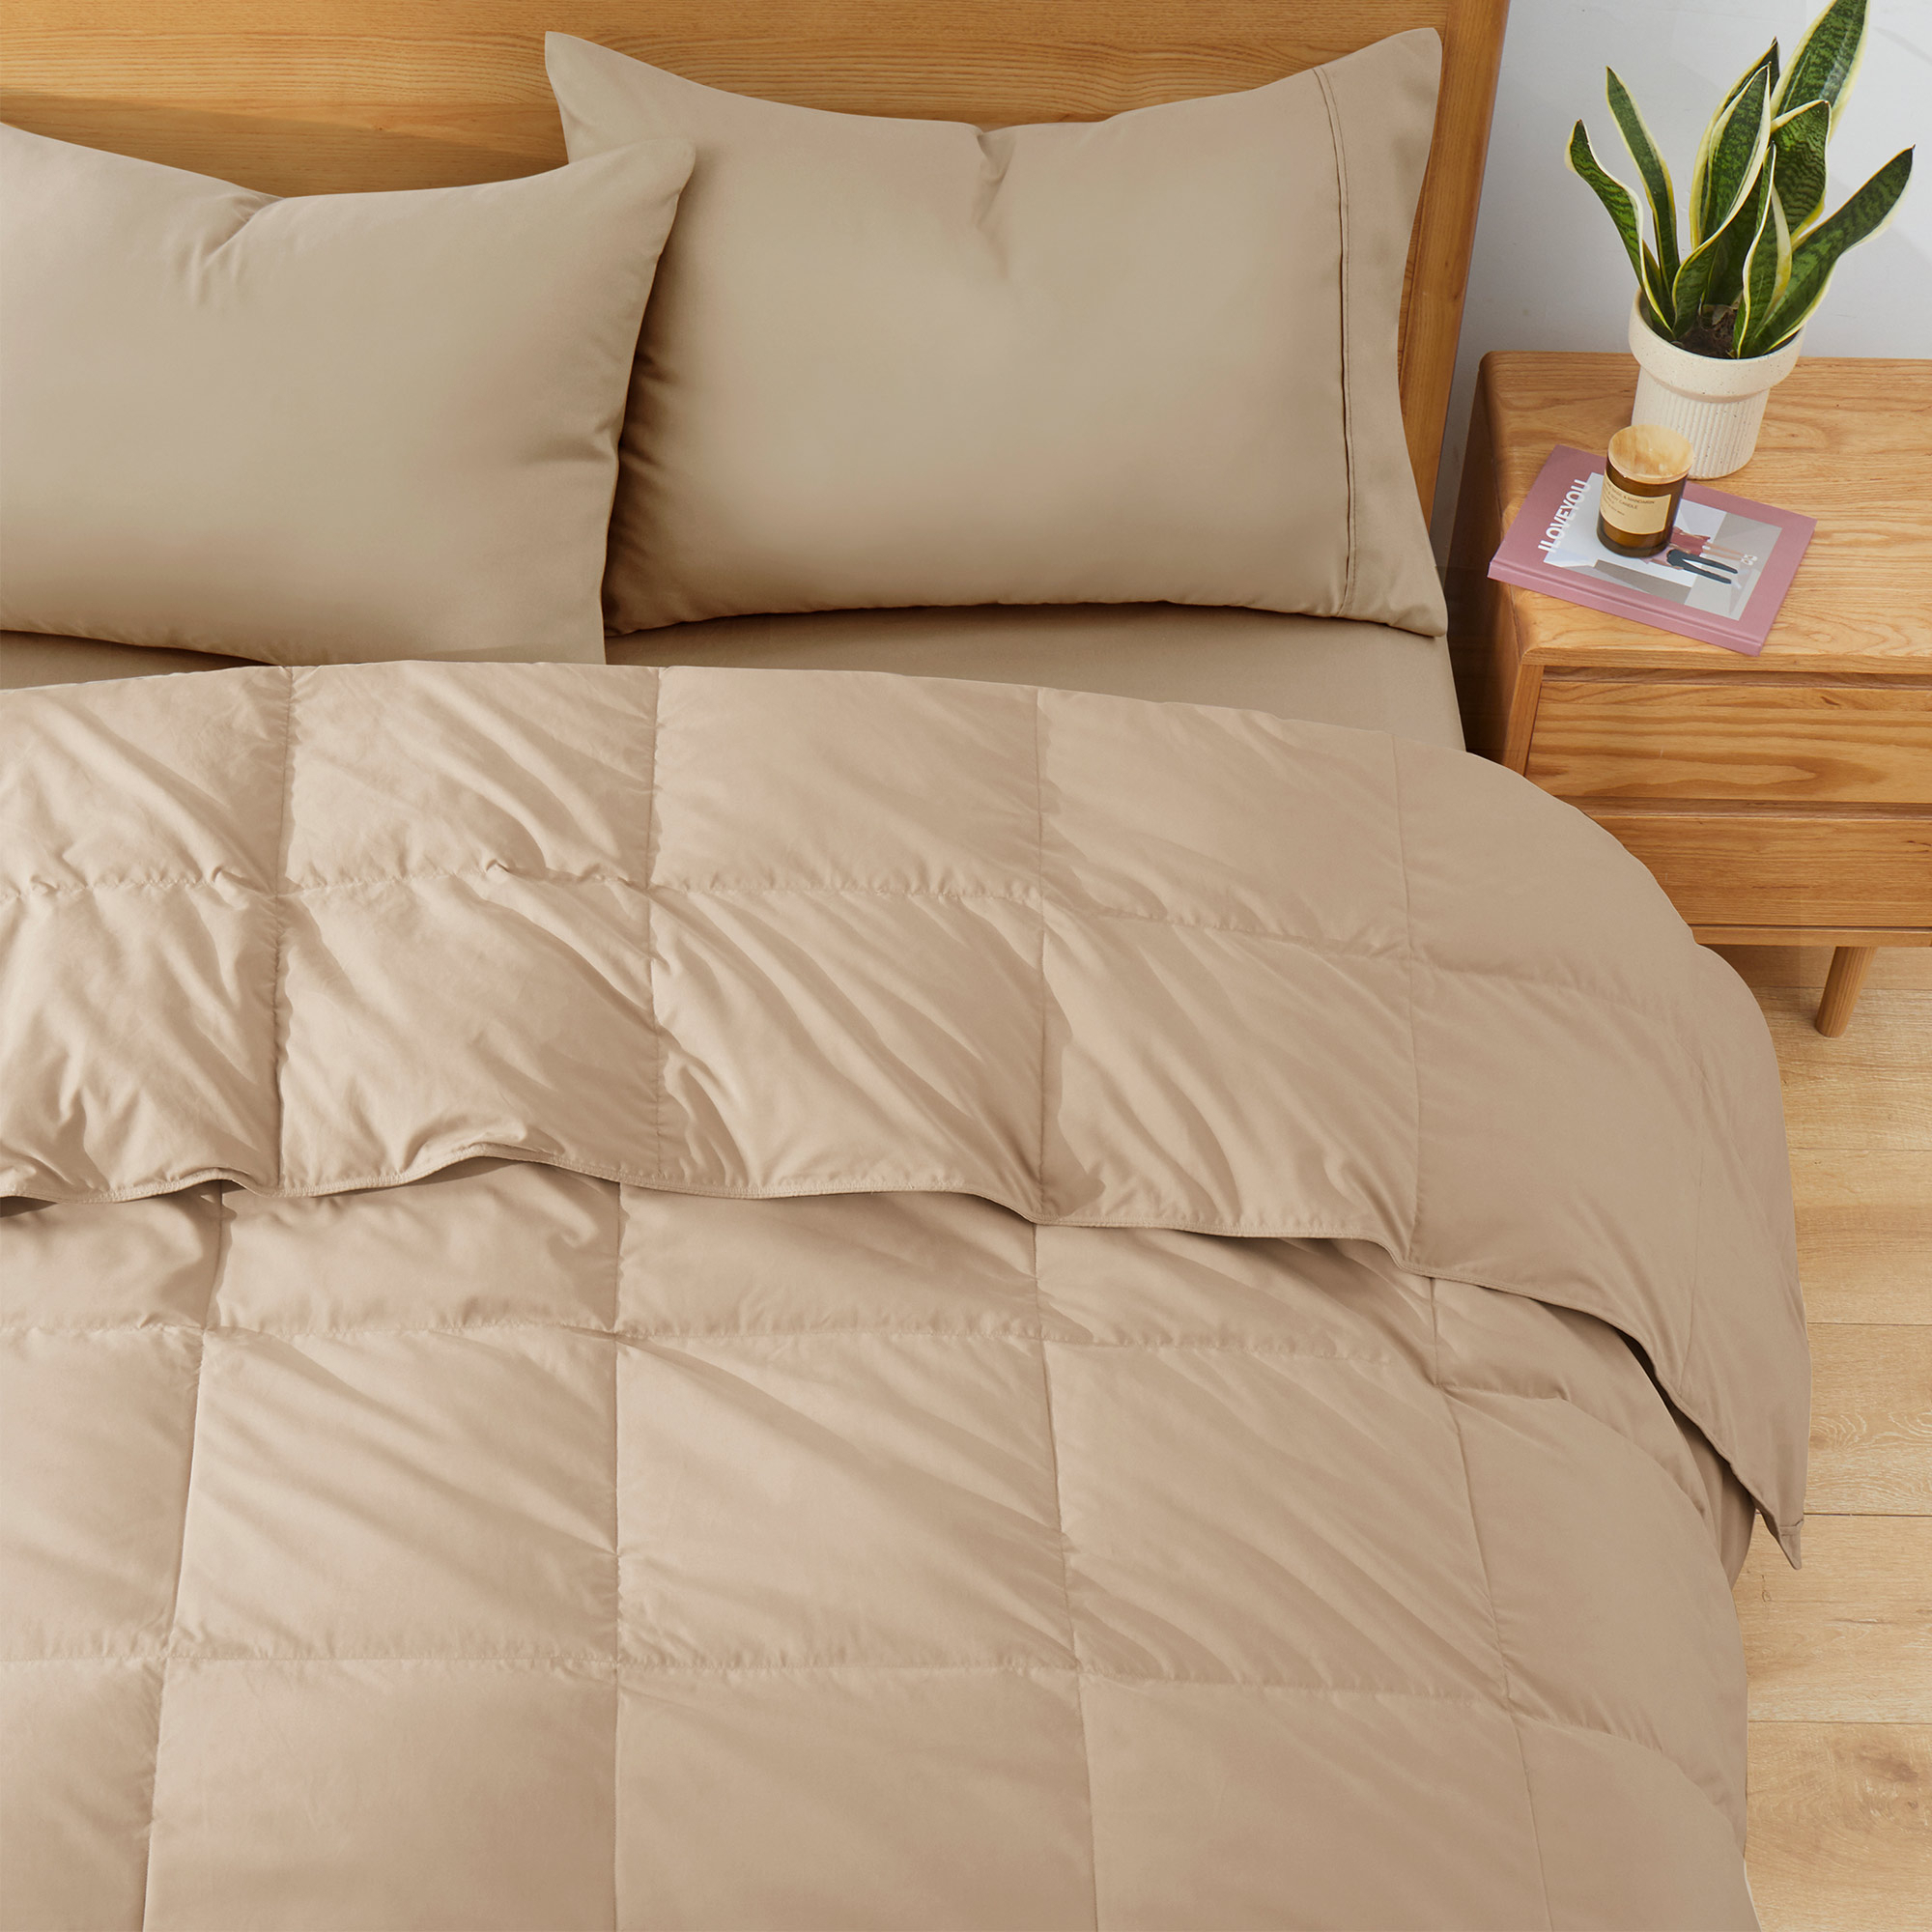 Lightweight Goose Down Feather Fiber Comforter, Soft And Fluffy Comforter For Restful Sleep - California King